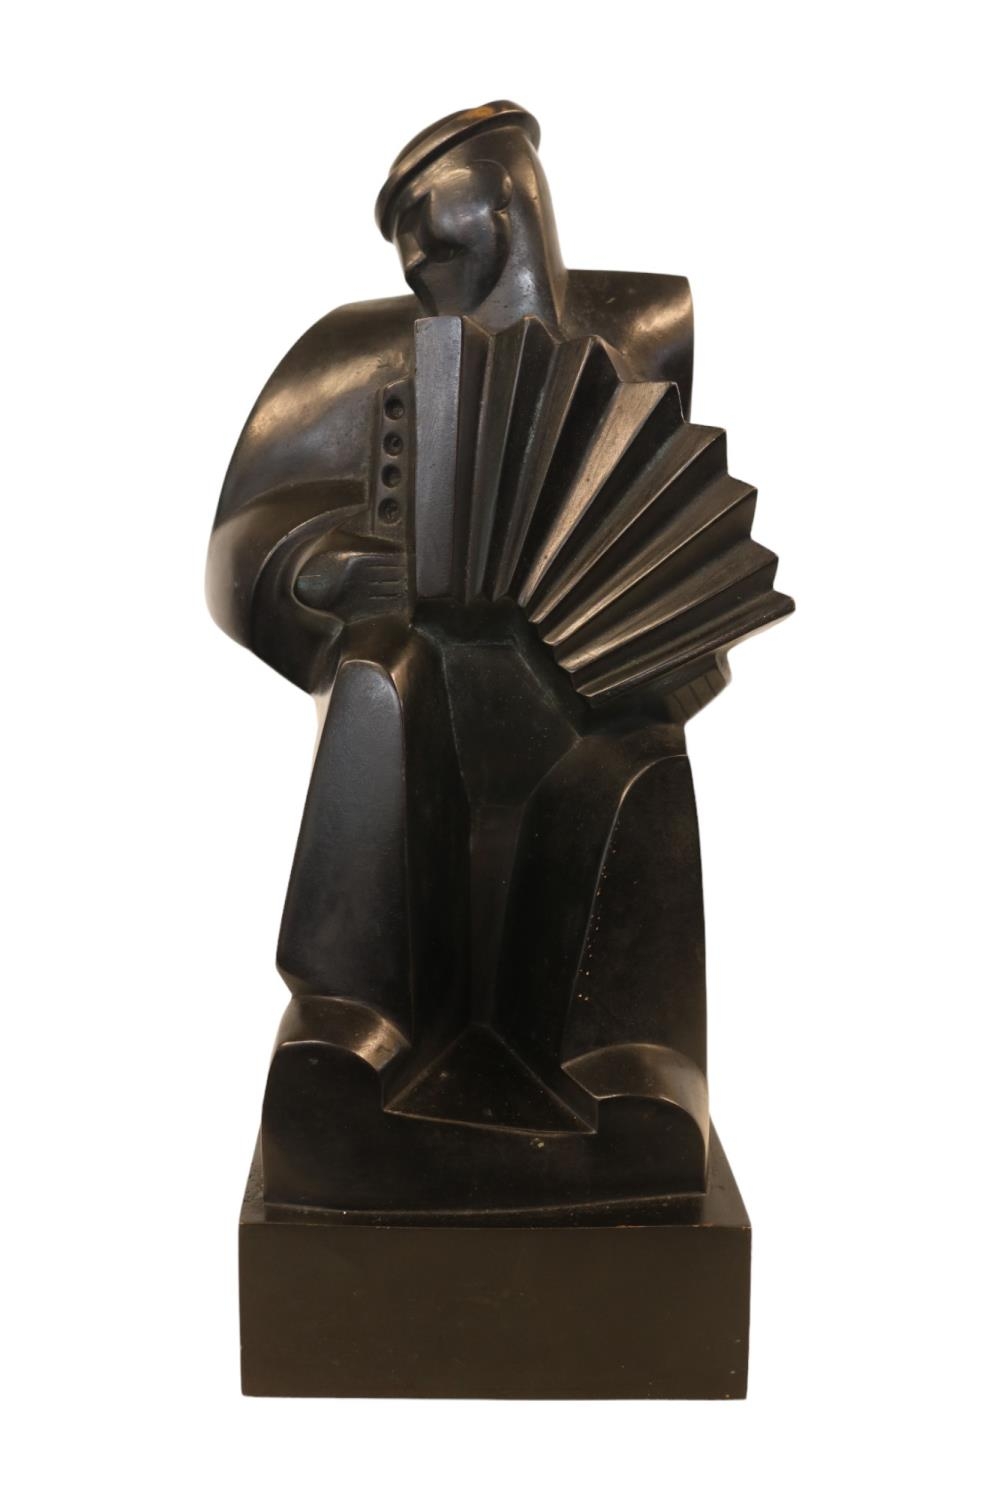 'L'Accordéoniste' (Accordionist), Art Deco Cast Bronze after Jan and Joel Martel 1896 - 1966. 35cm